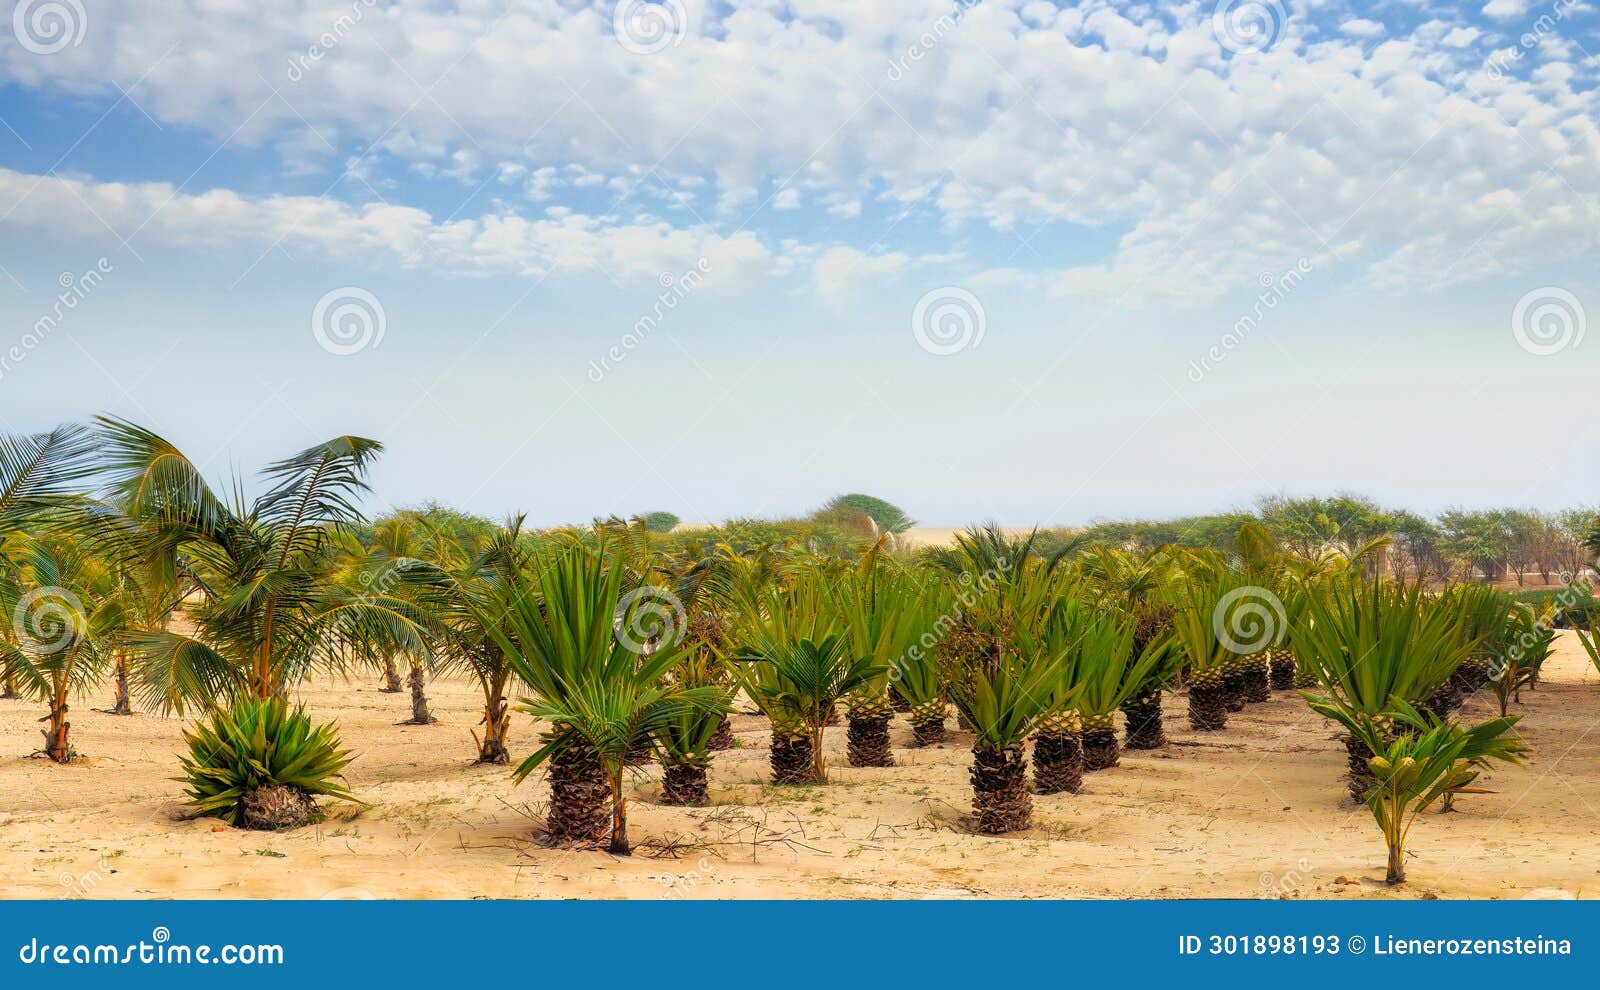 boa vista cape verde - palm trees in desert landscape